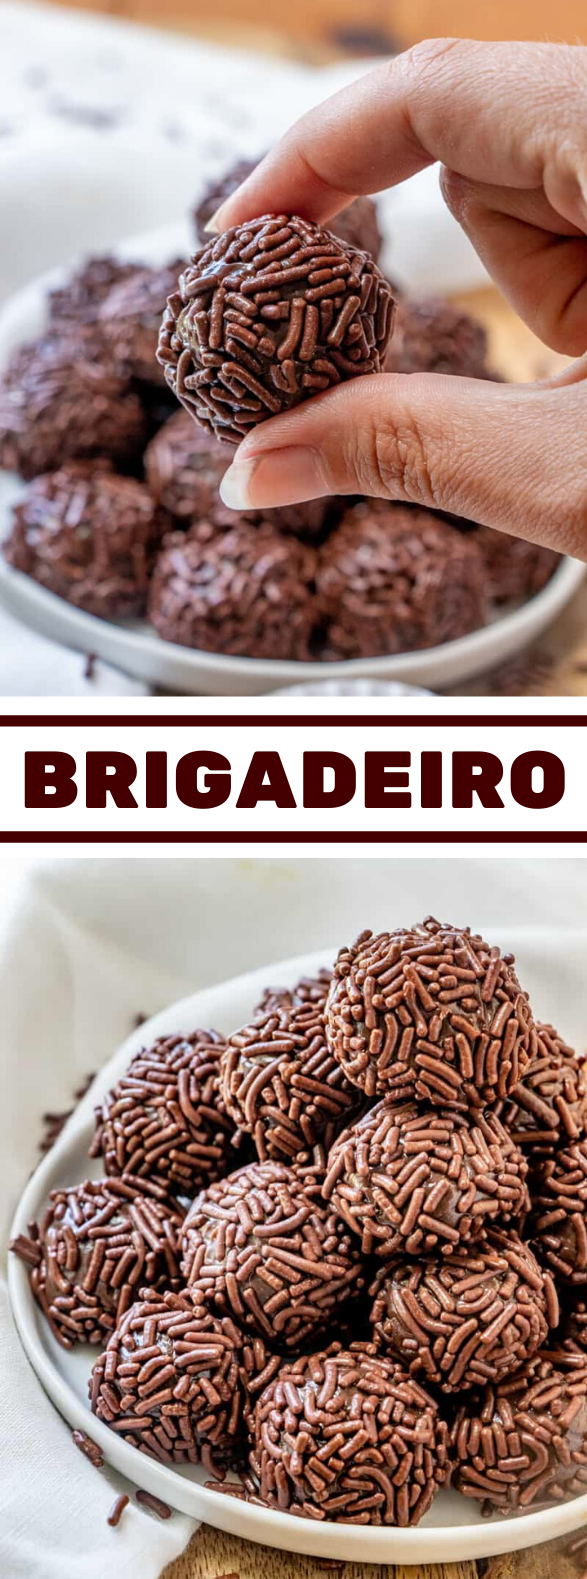 BRIGADEIRO #chocolate #desserts